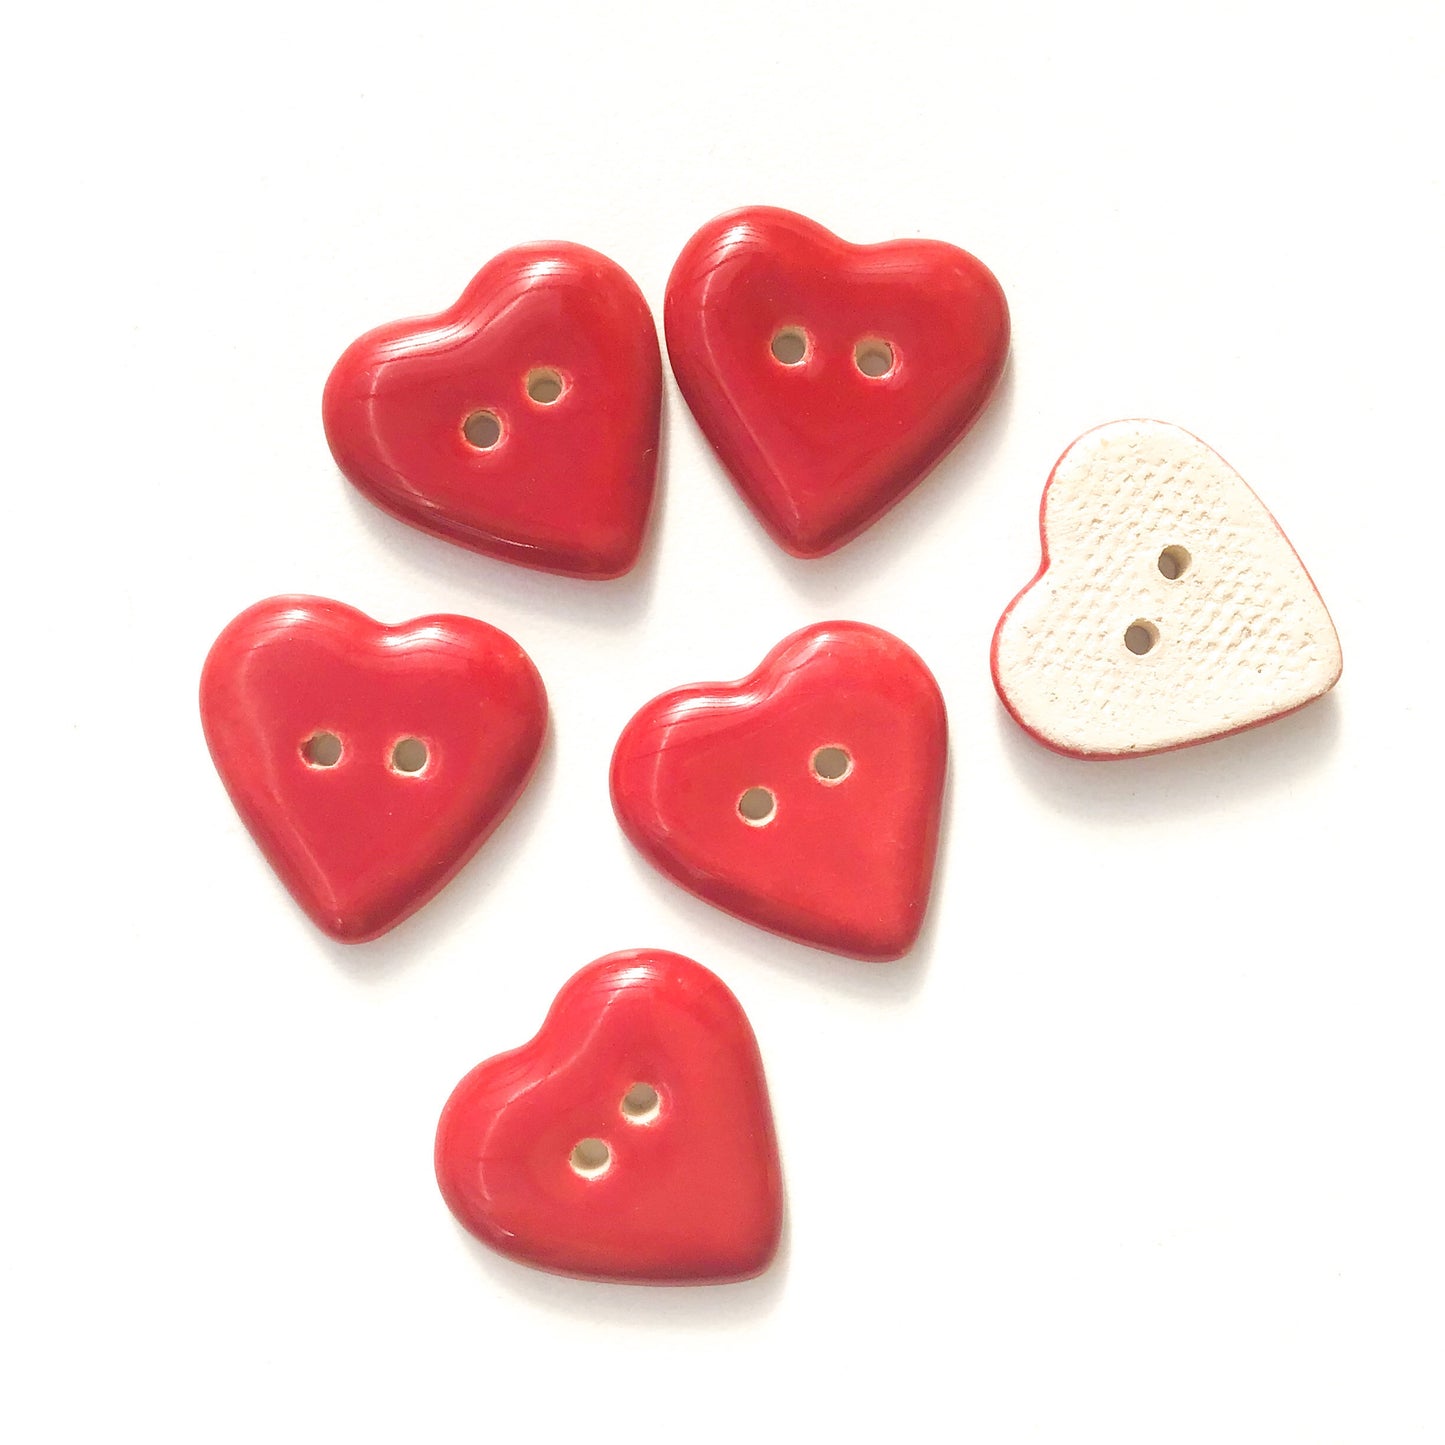 Deep Red Heart Buttons - Ceramic Heart Buttons - 7/8" - 6 Pack (ws-79)